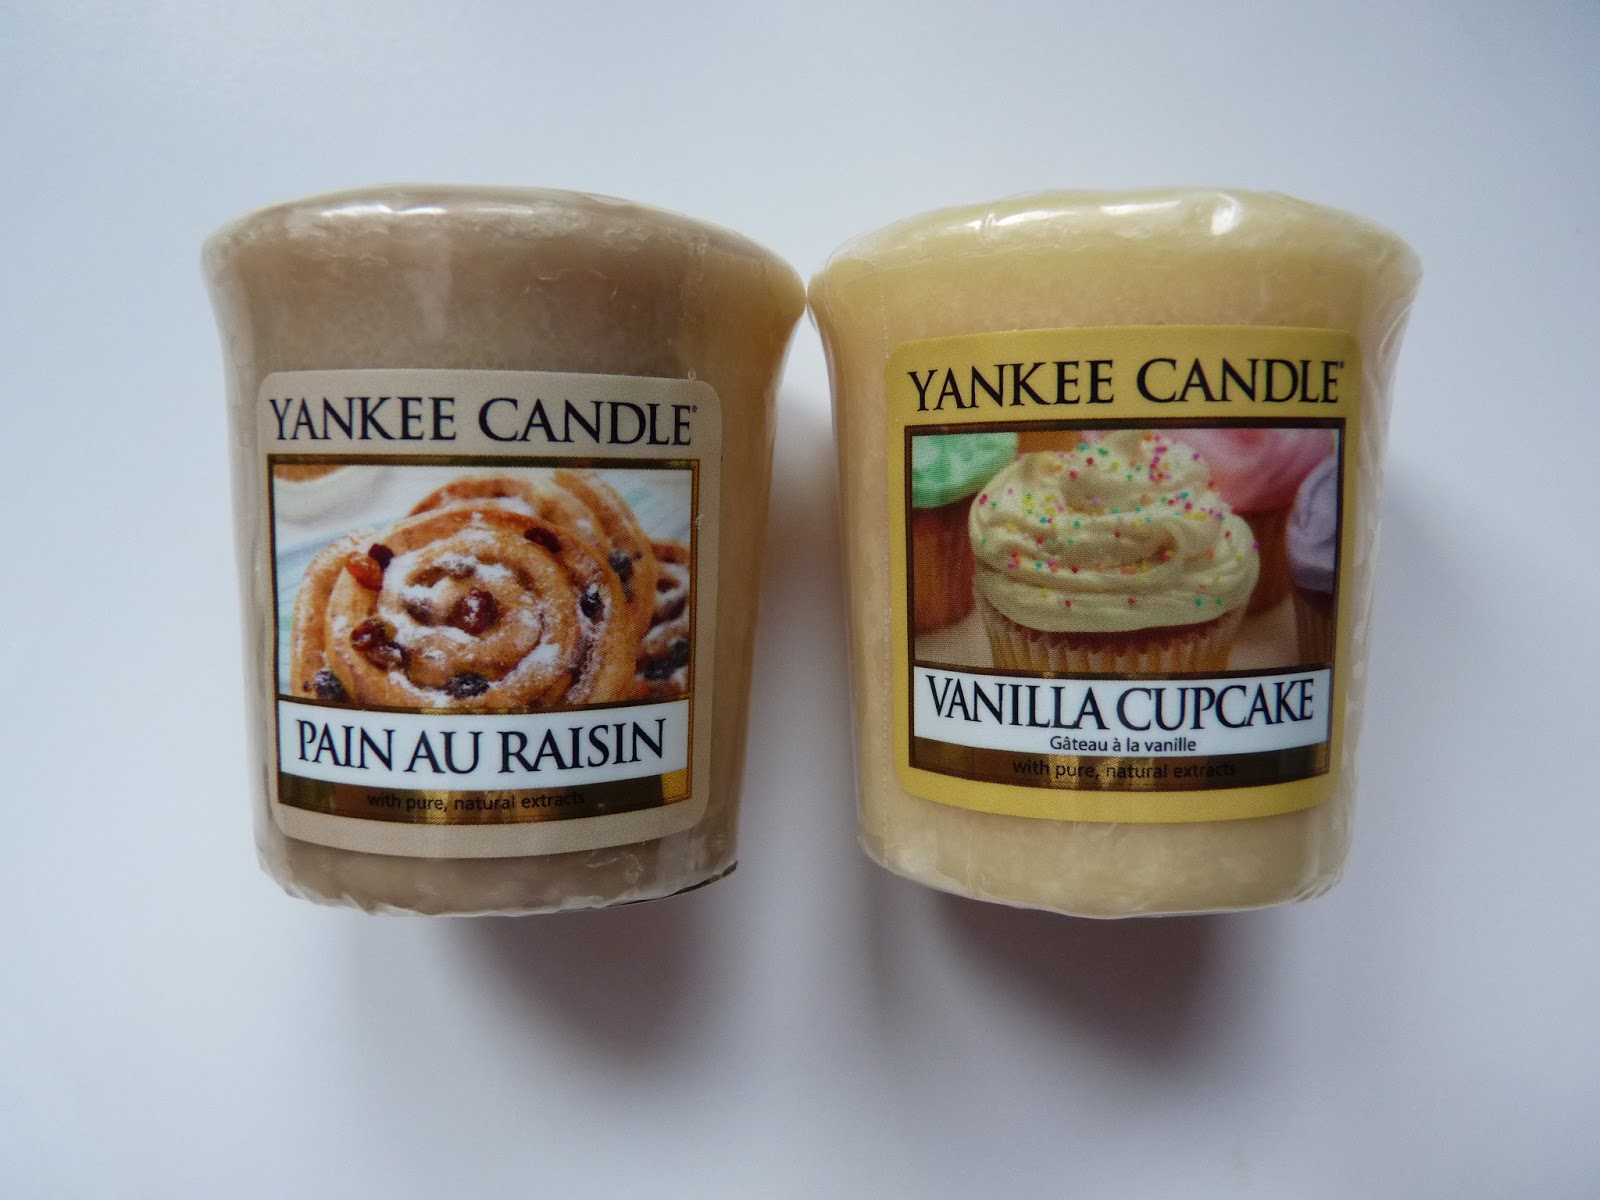 Yankee Candle Pain au raisin